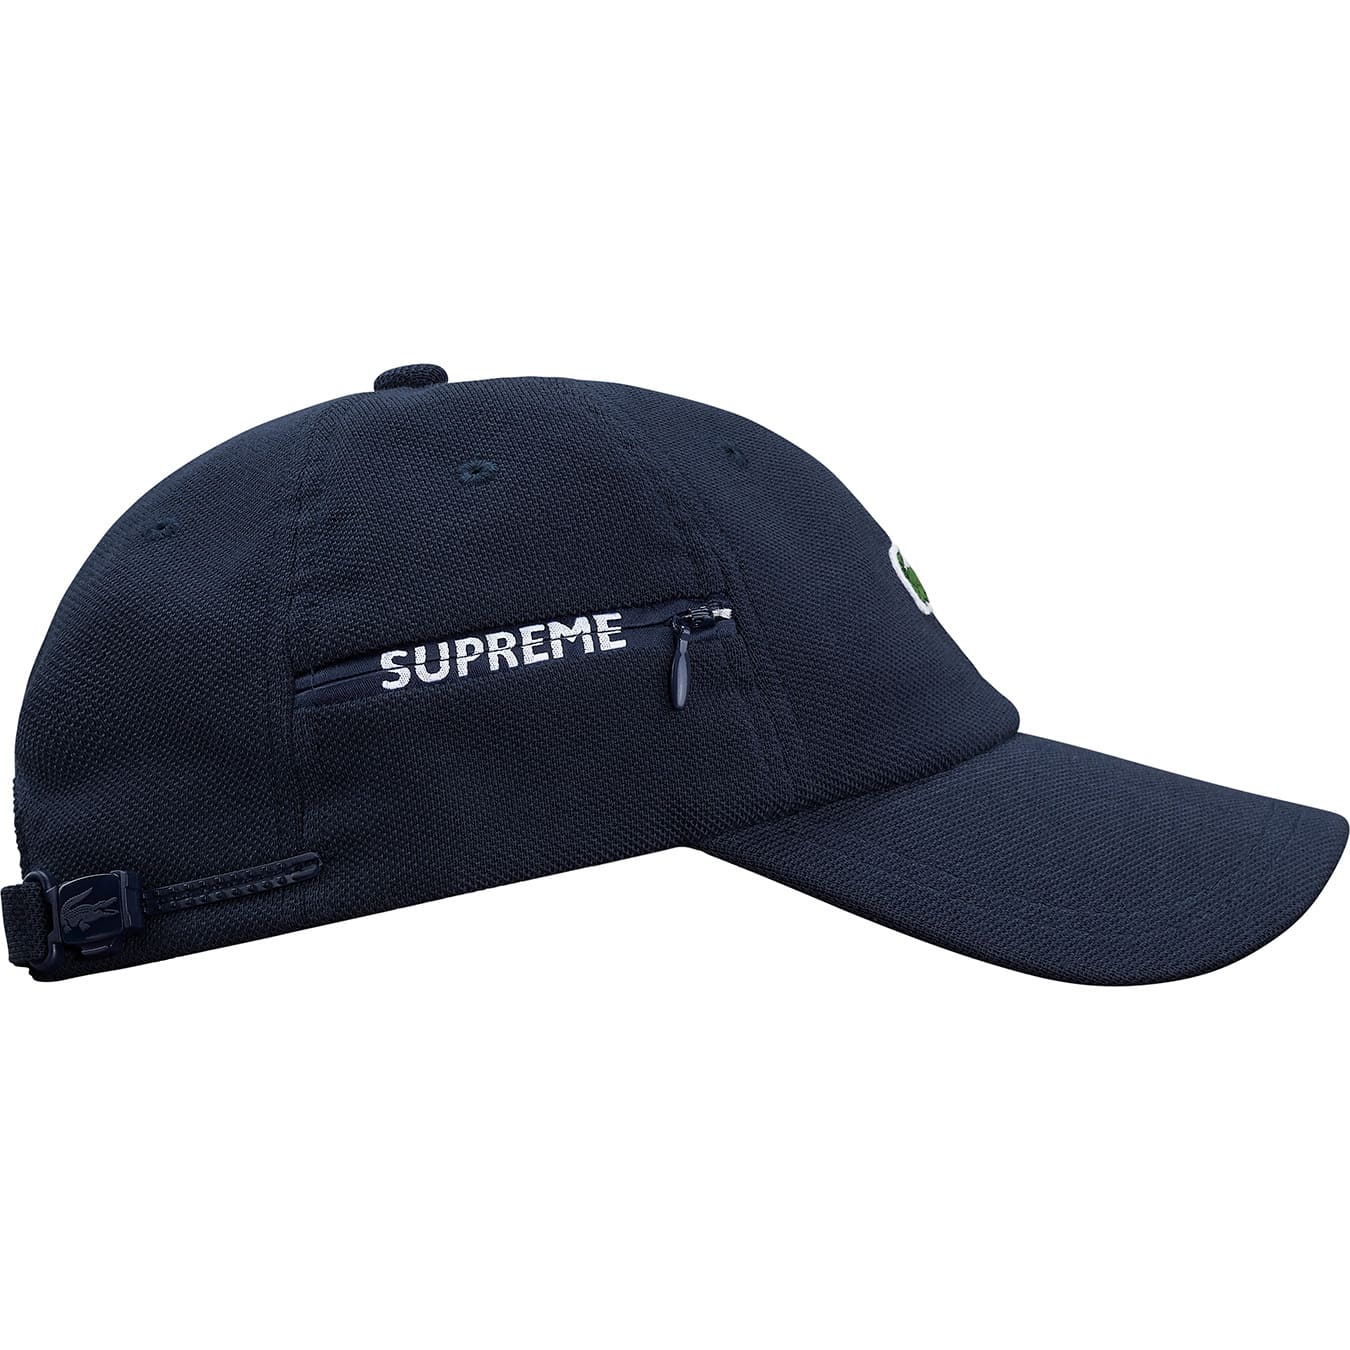 Supreme®/LACOSTE Pique 6-Panel